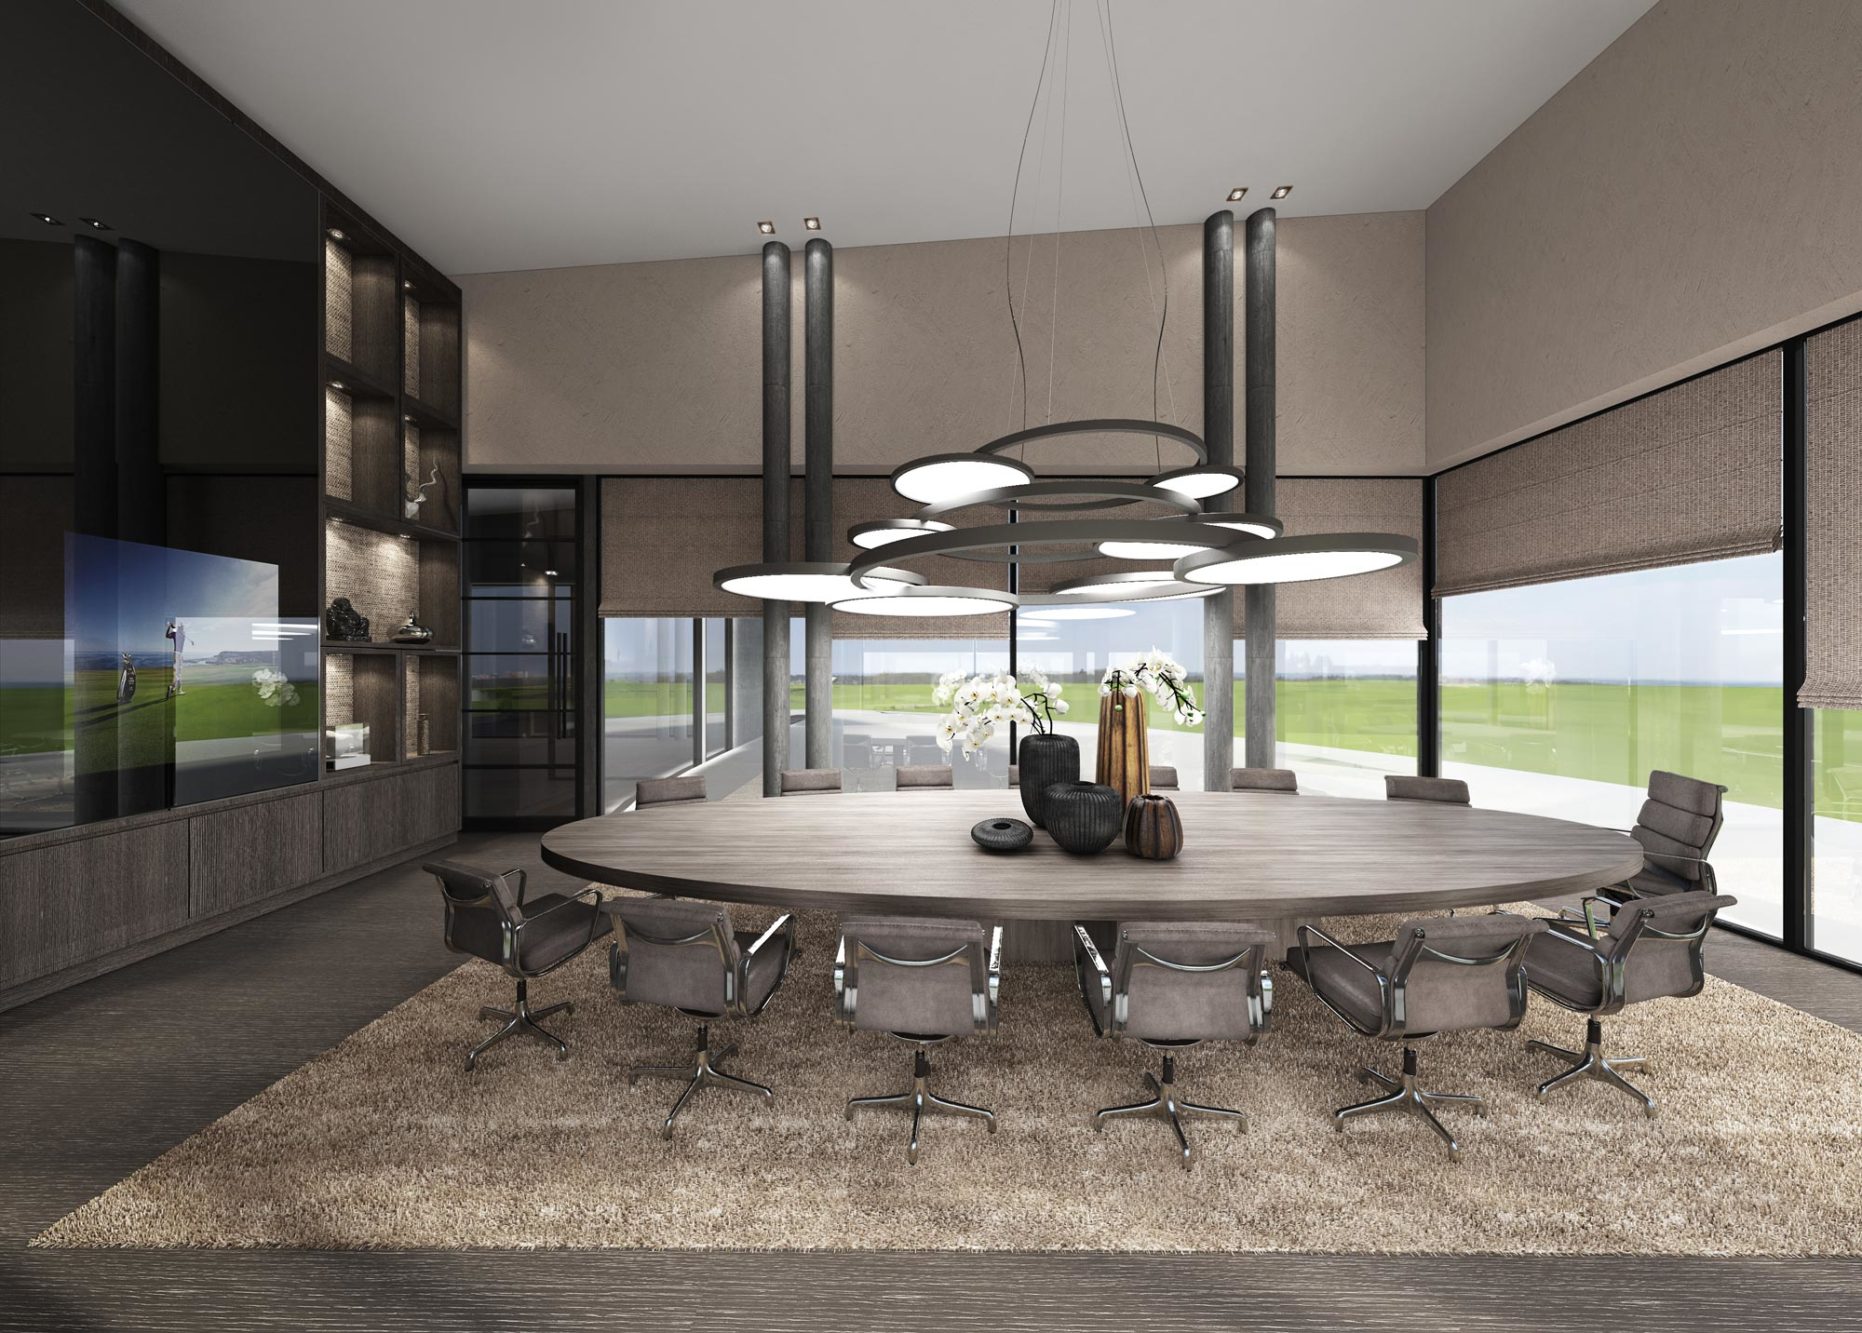 Golf Club Office Meeting Interior Luxury Architecture 3d 1862x1333 